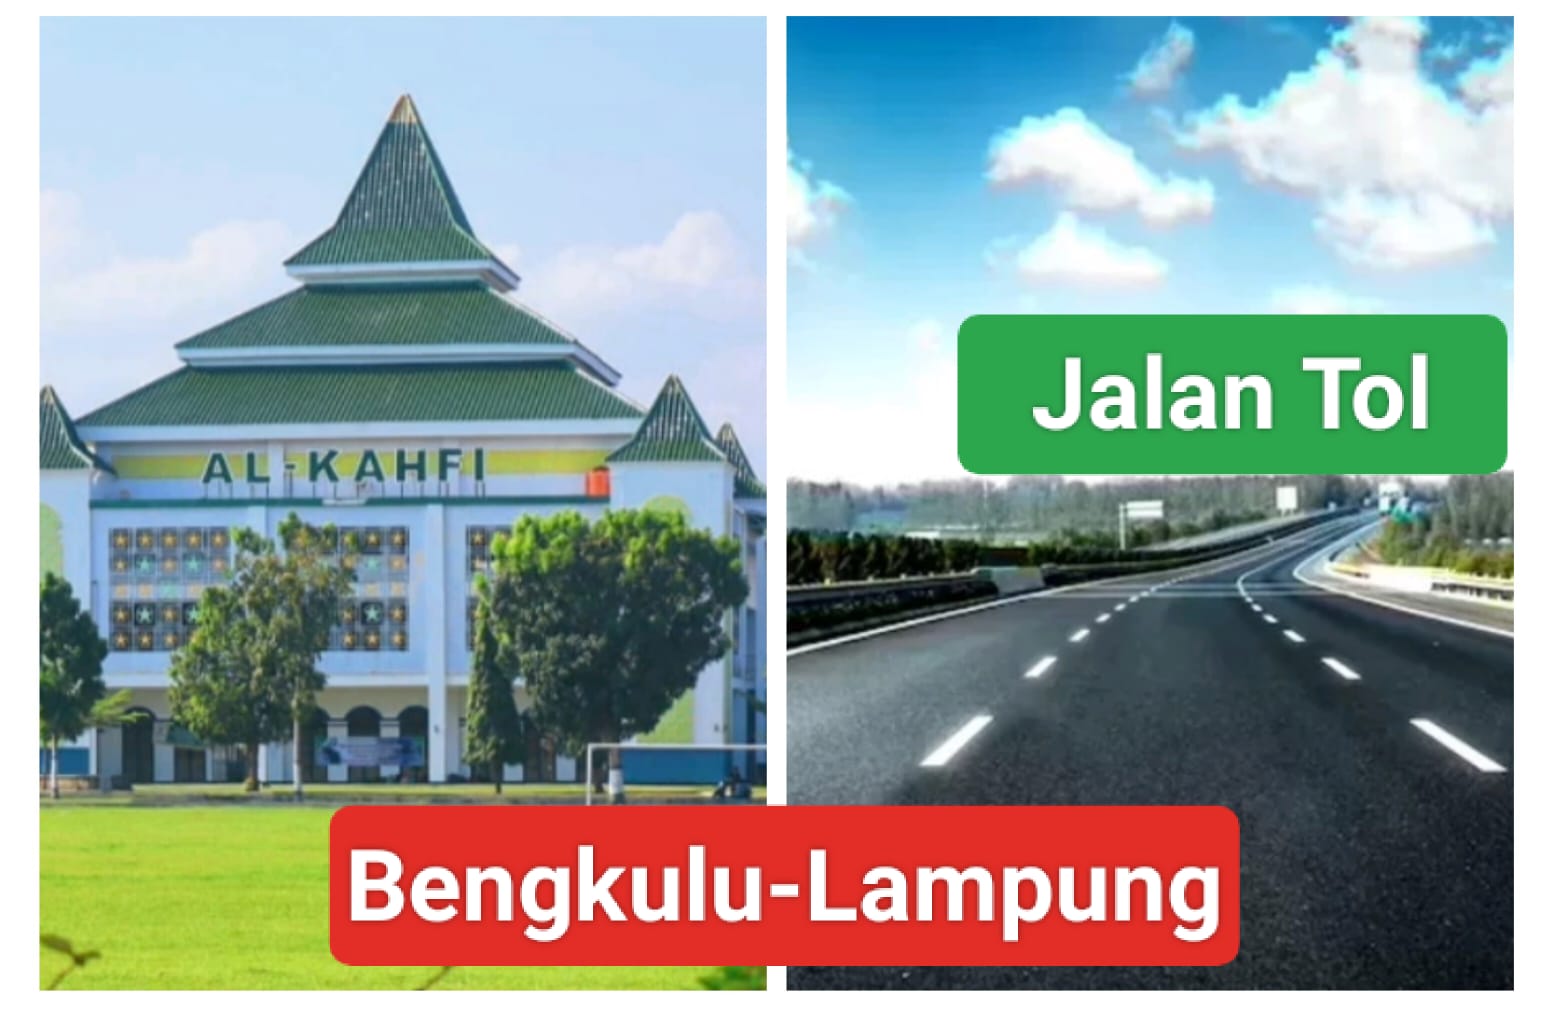 Dilintasi Tol Bengkulu-Lampung sepanjang 180 Km, Begini Tanggapan Kabupaten di Jalinbar Sumatra ini